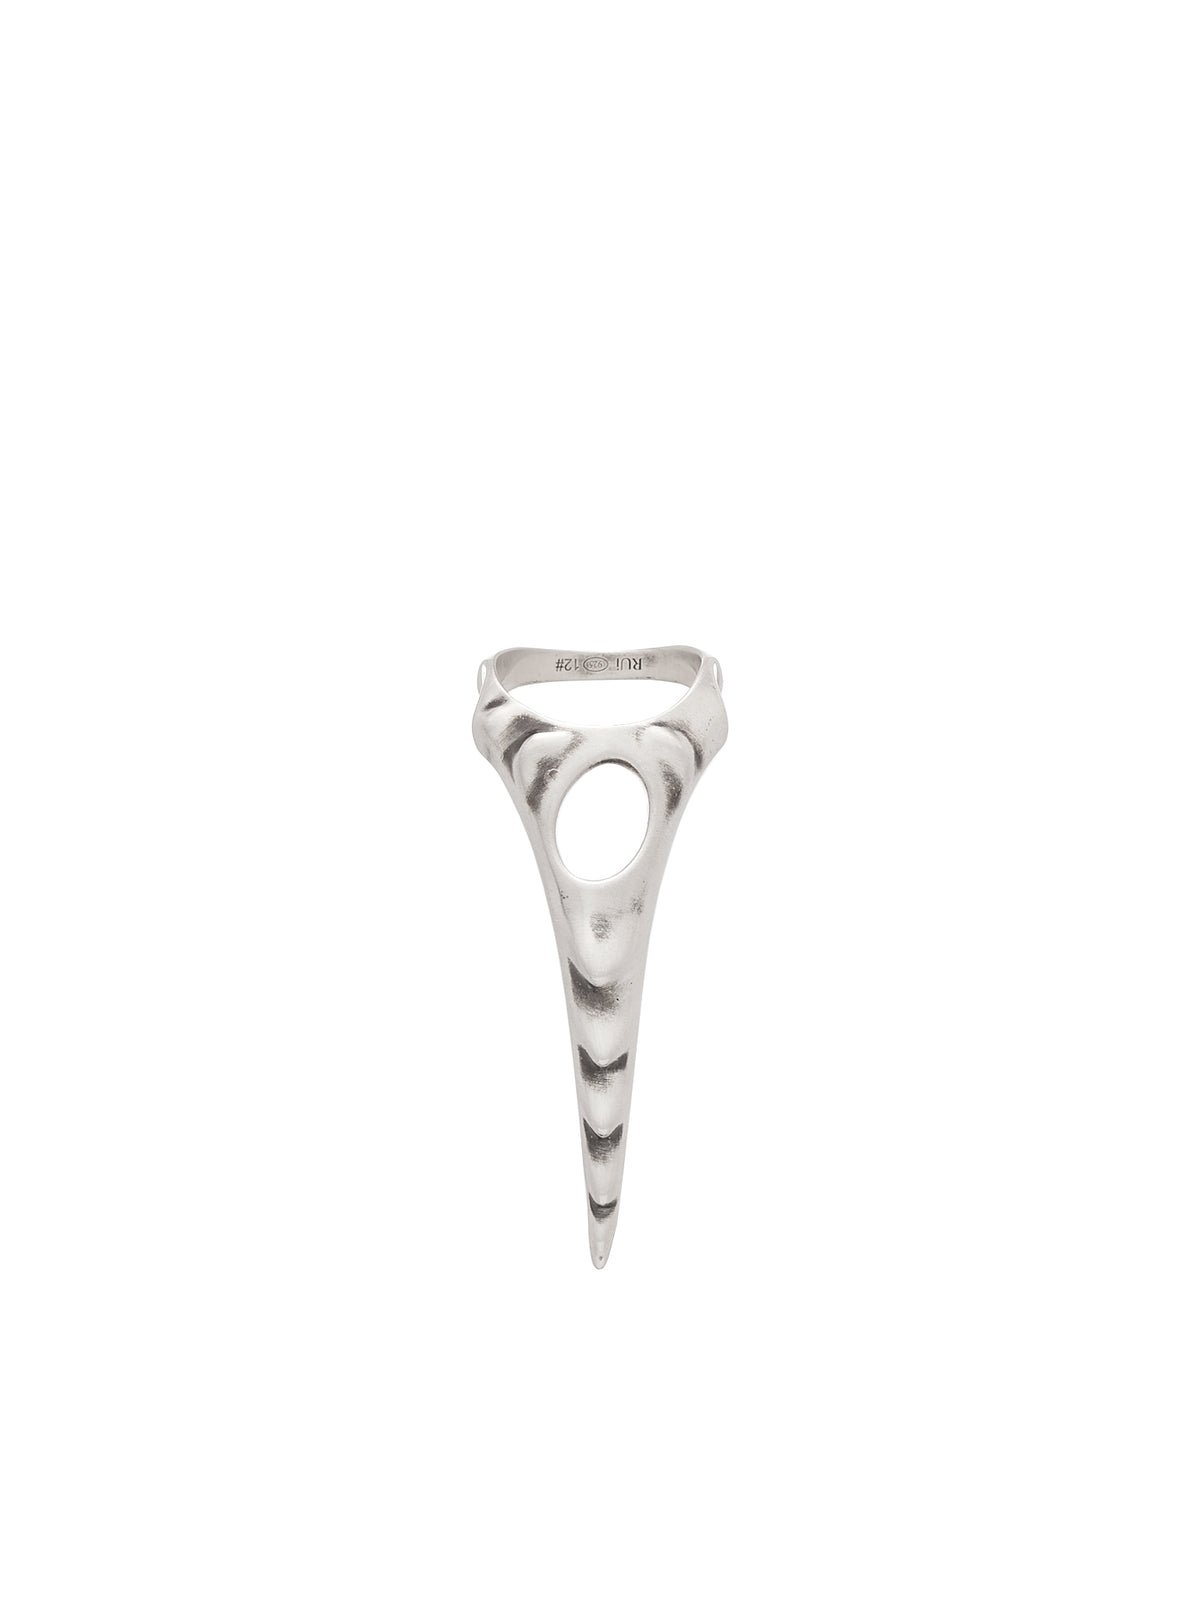 Ash Silver Claw Ring (RSS23AC01A-ASH-SILVER)